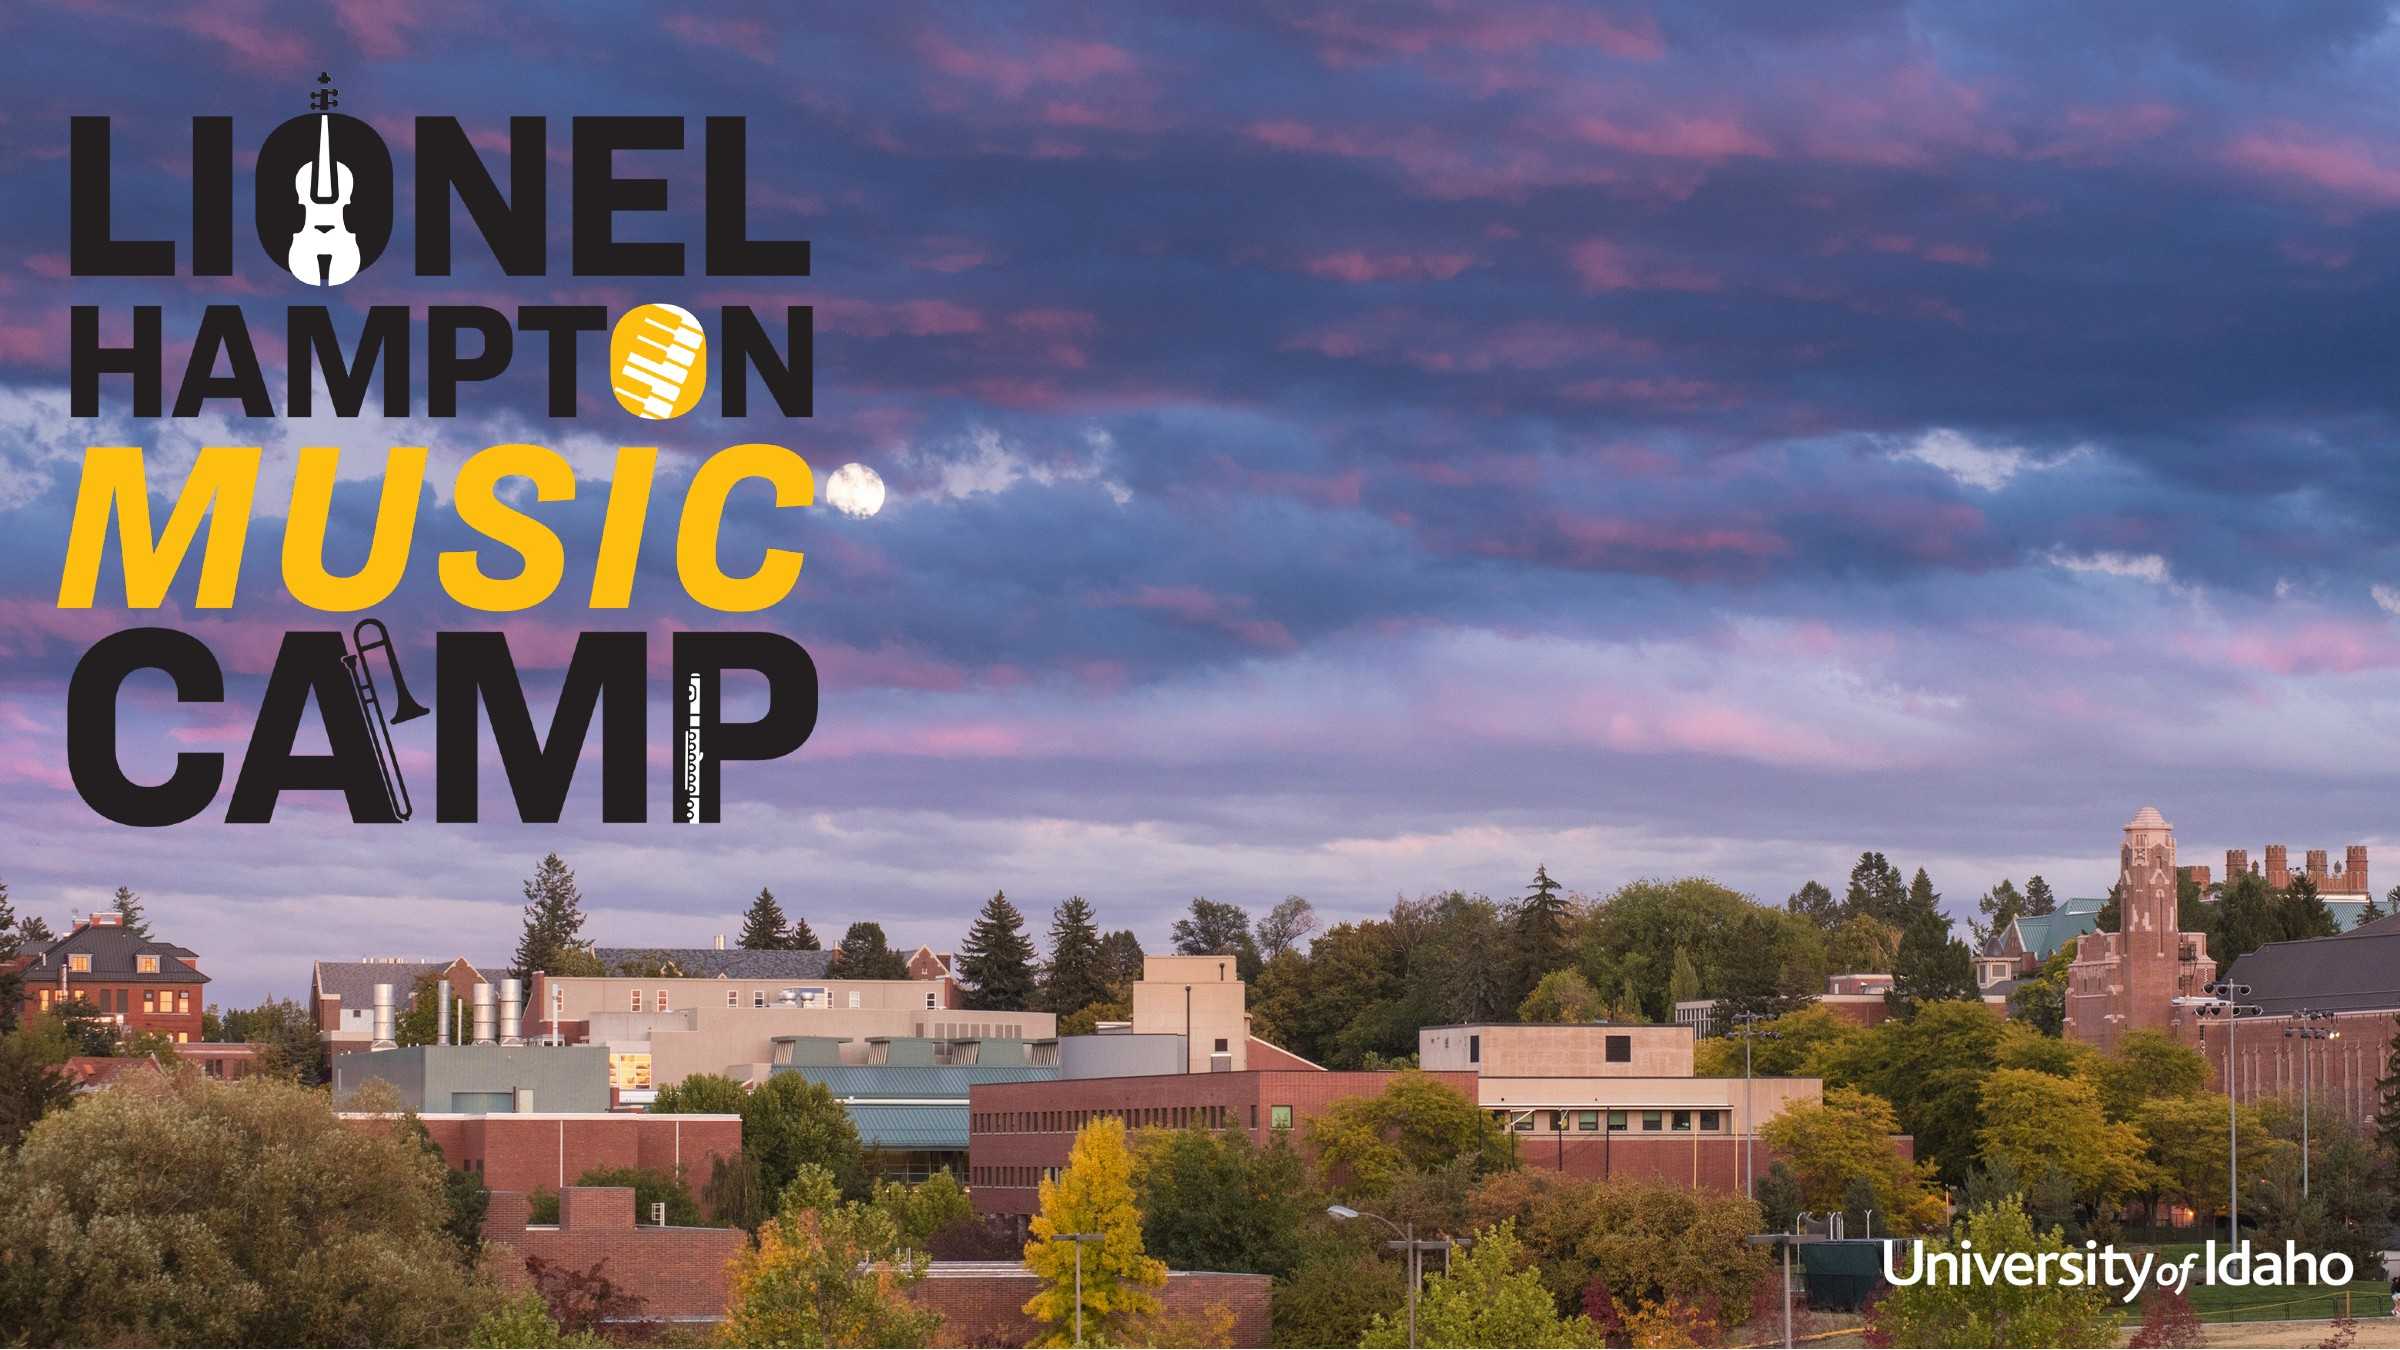 Lionel Hampton Summer Music Camp Registration - Deposit